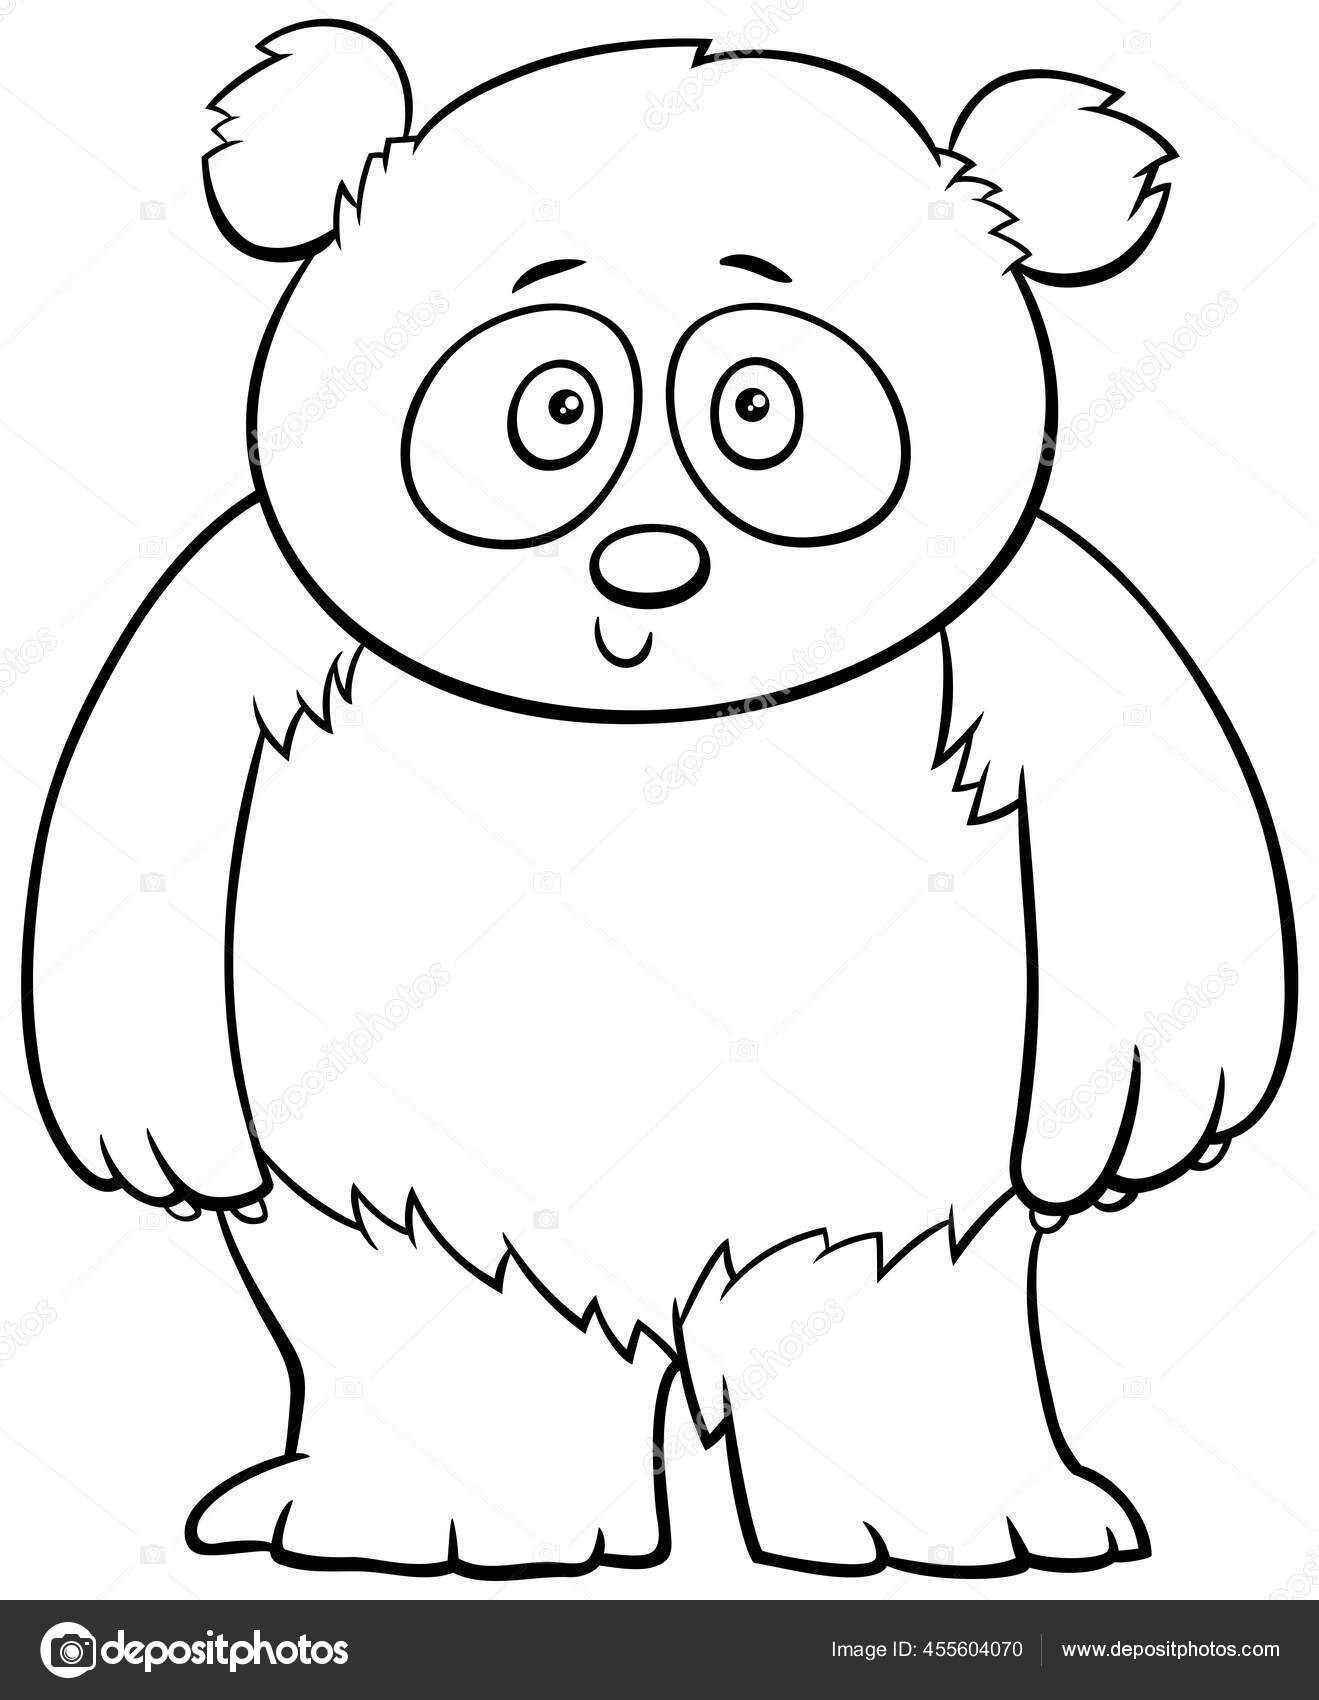 Kartun Hitam Dan Putih Ilustrasi Bayi Panda Lucu Beruang Komik Stok Vektor Izakowski 455604070